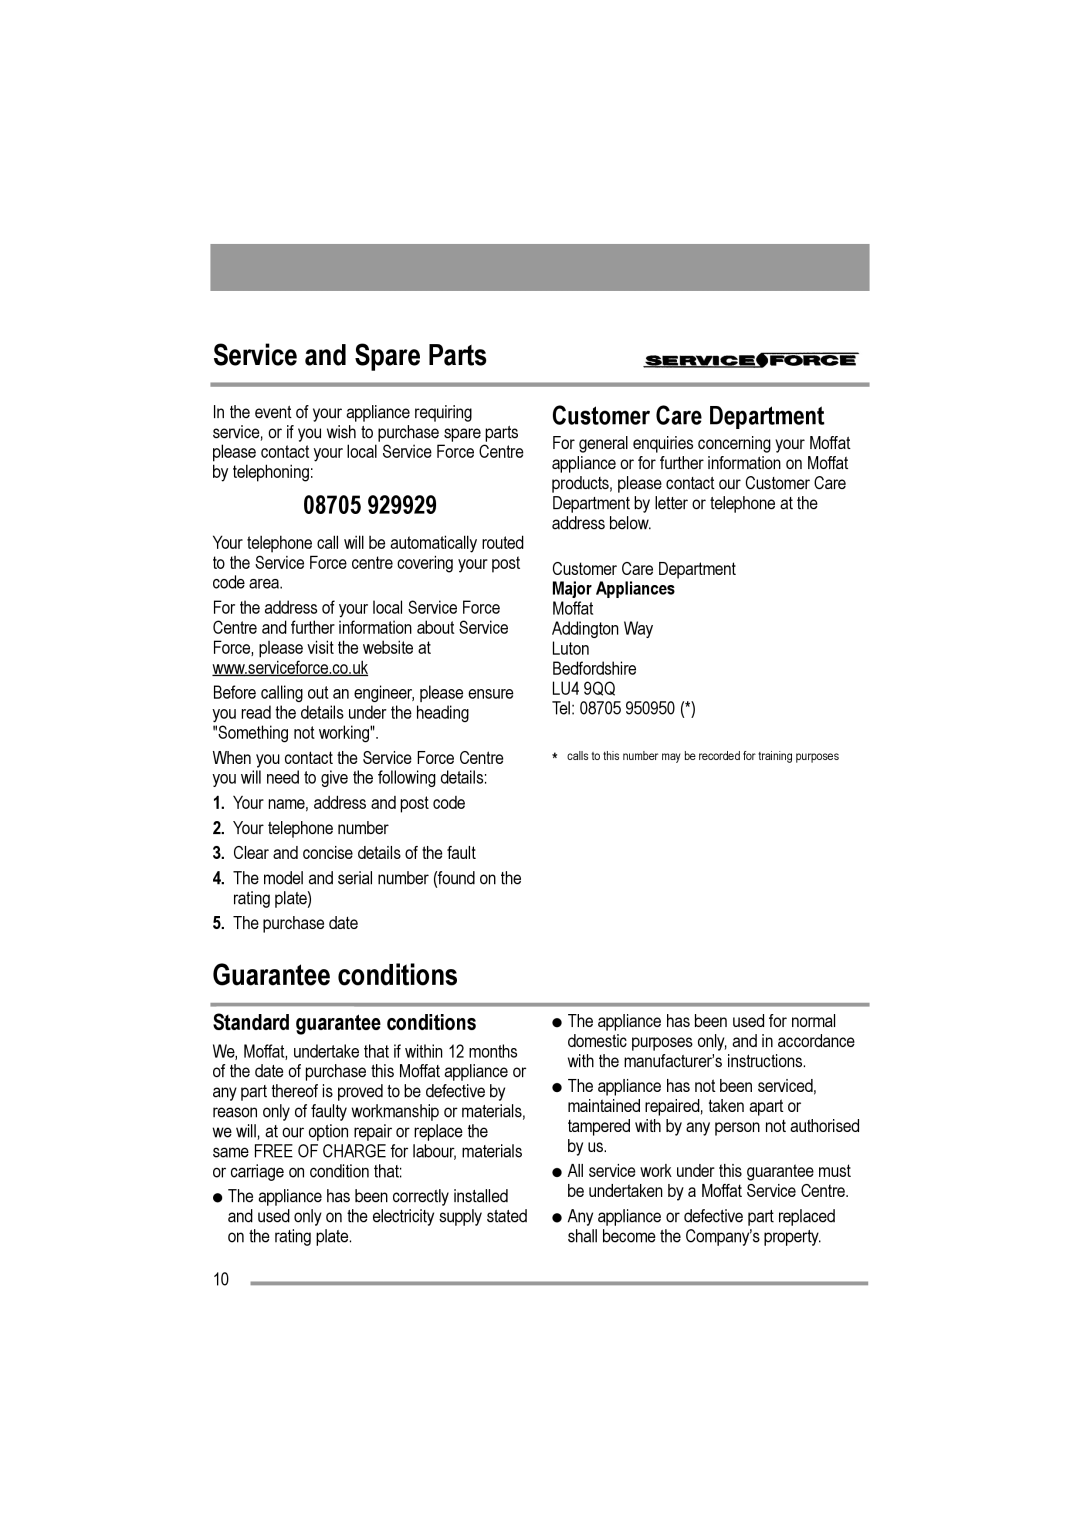 Moffat MUL 514 user manual Service and Spare Parts, Guarantee conditions, 08705, Customer Care Department, Major Appliances 